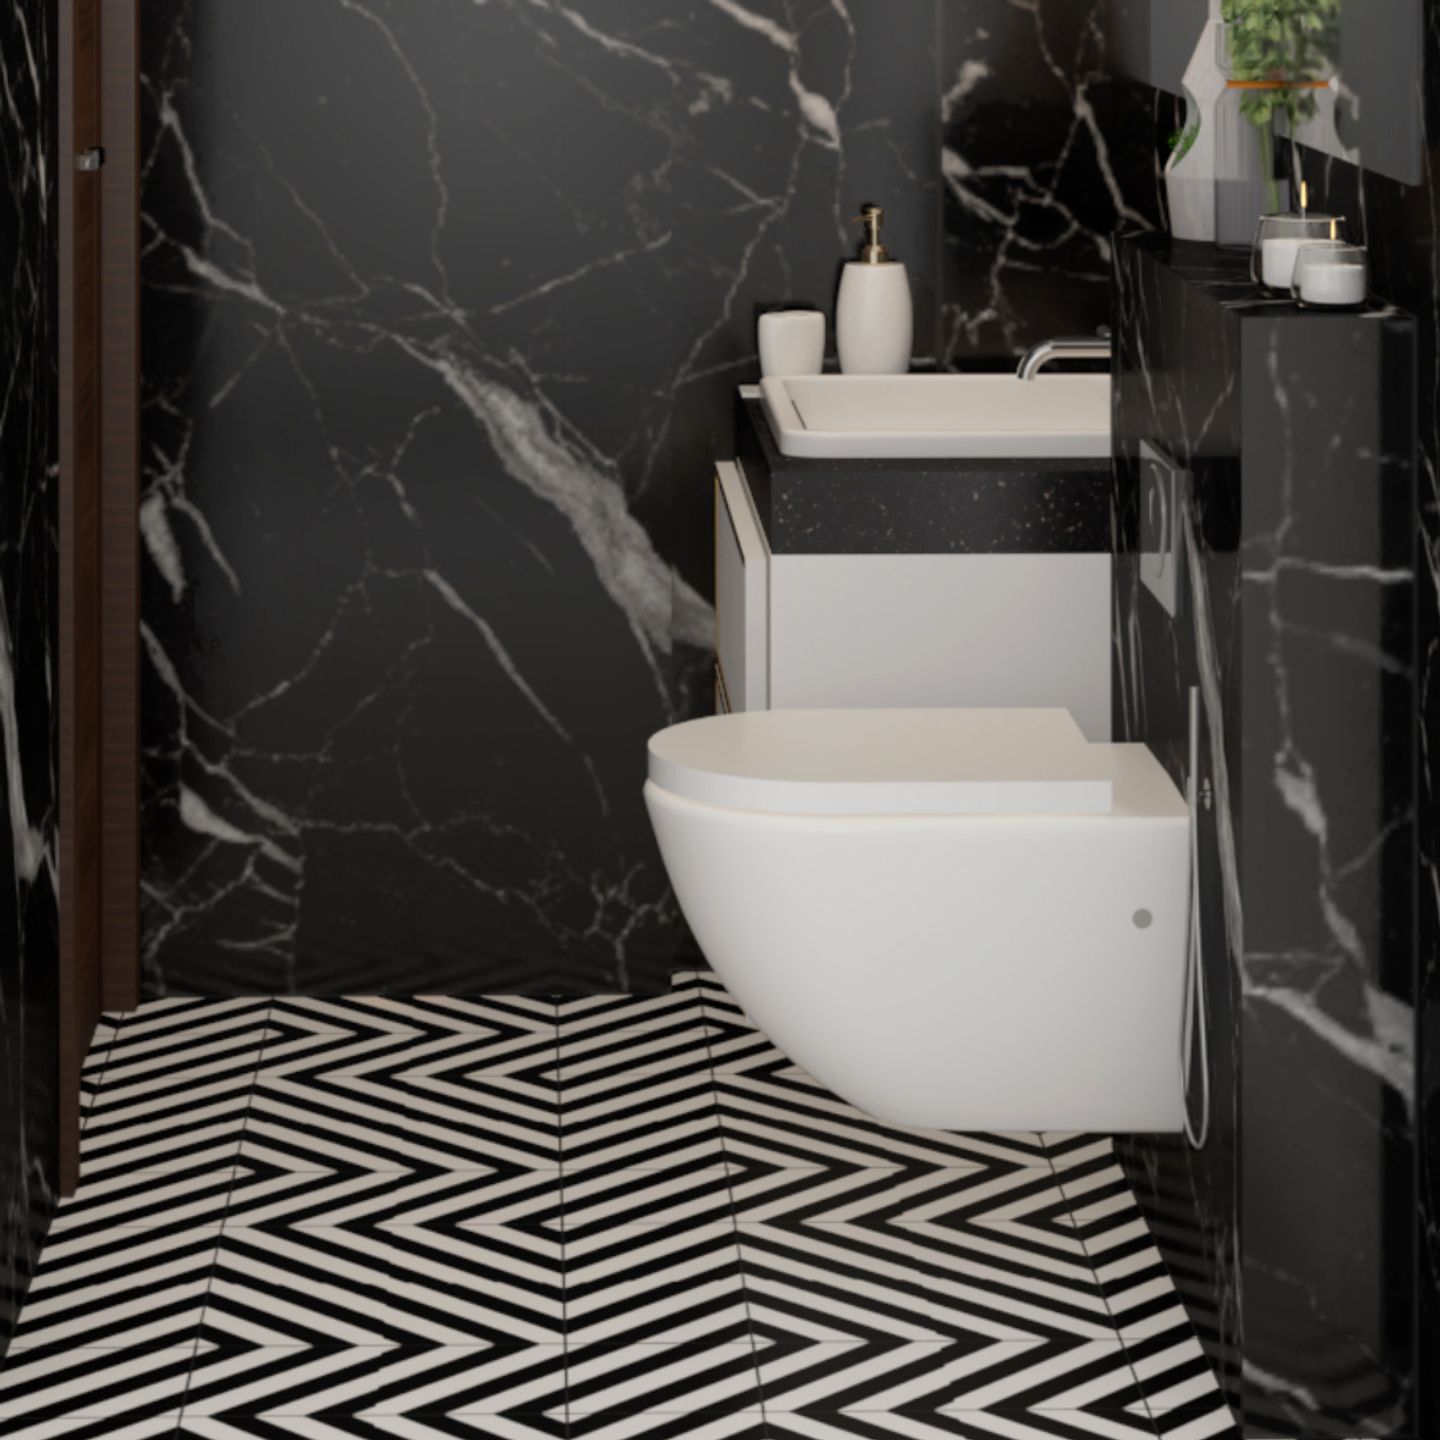 Ceramic Matte Black And White Bathroom Tile Design - Livspace